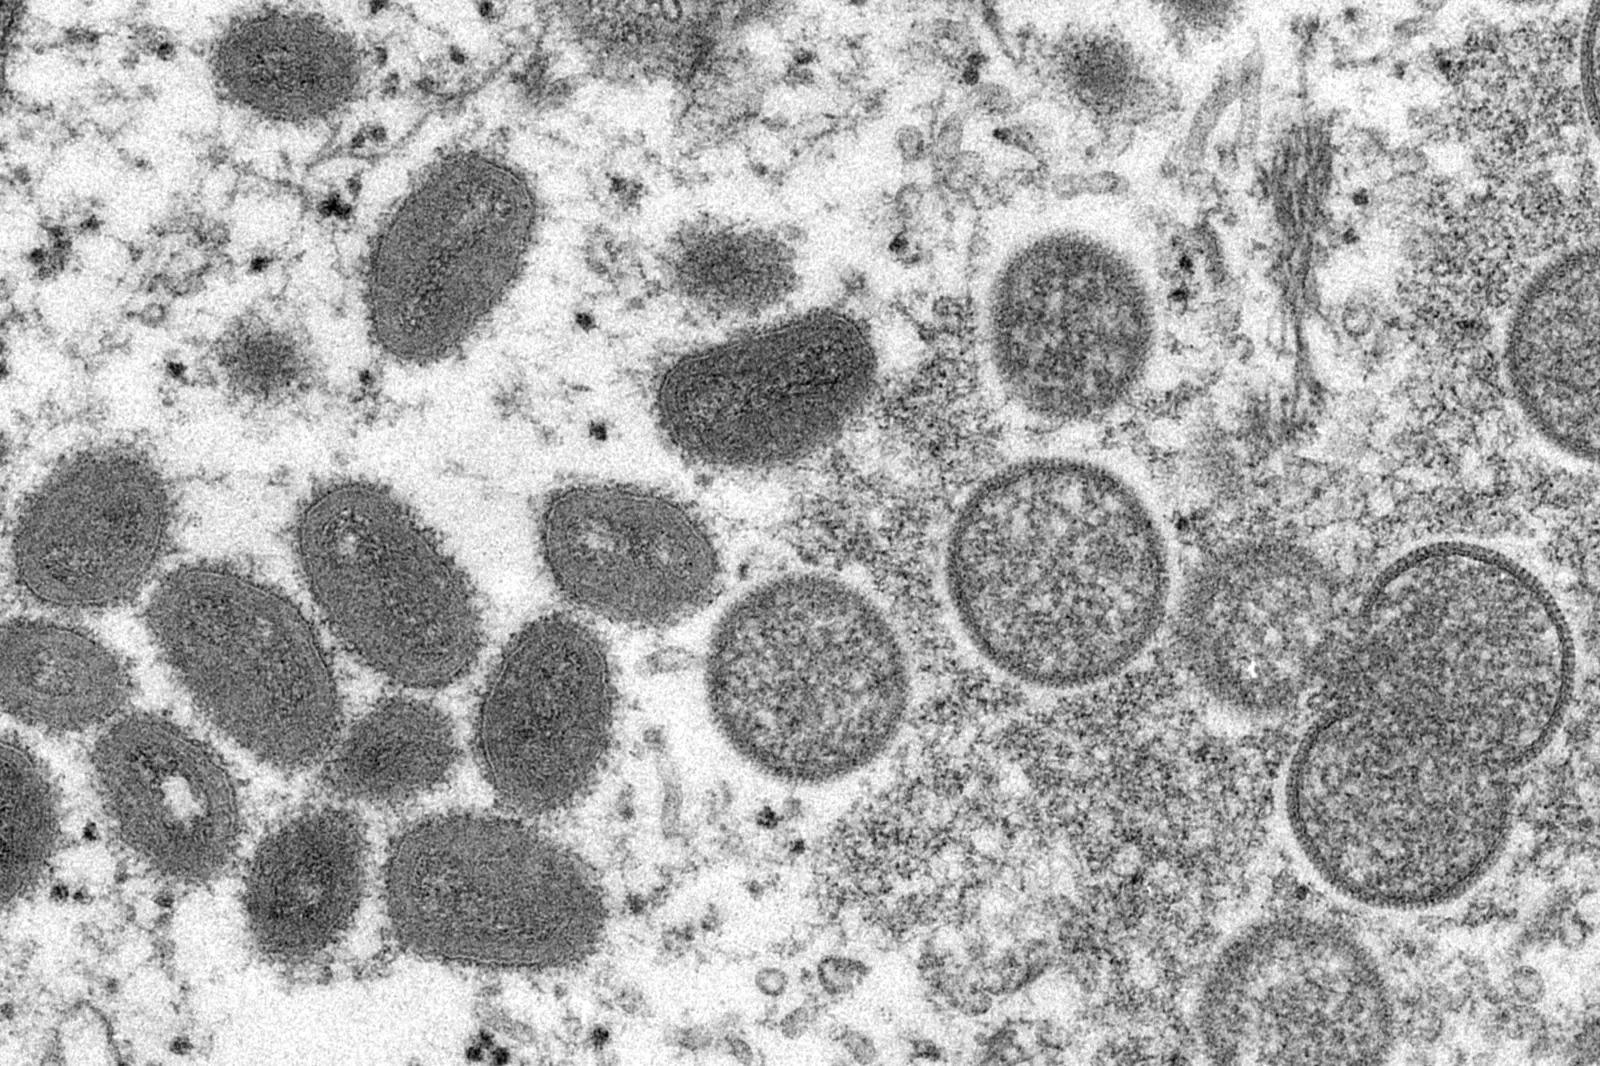 Mutations have made monkeypox 'smarter': Indian-origin scientists